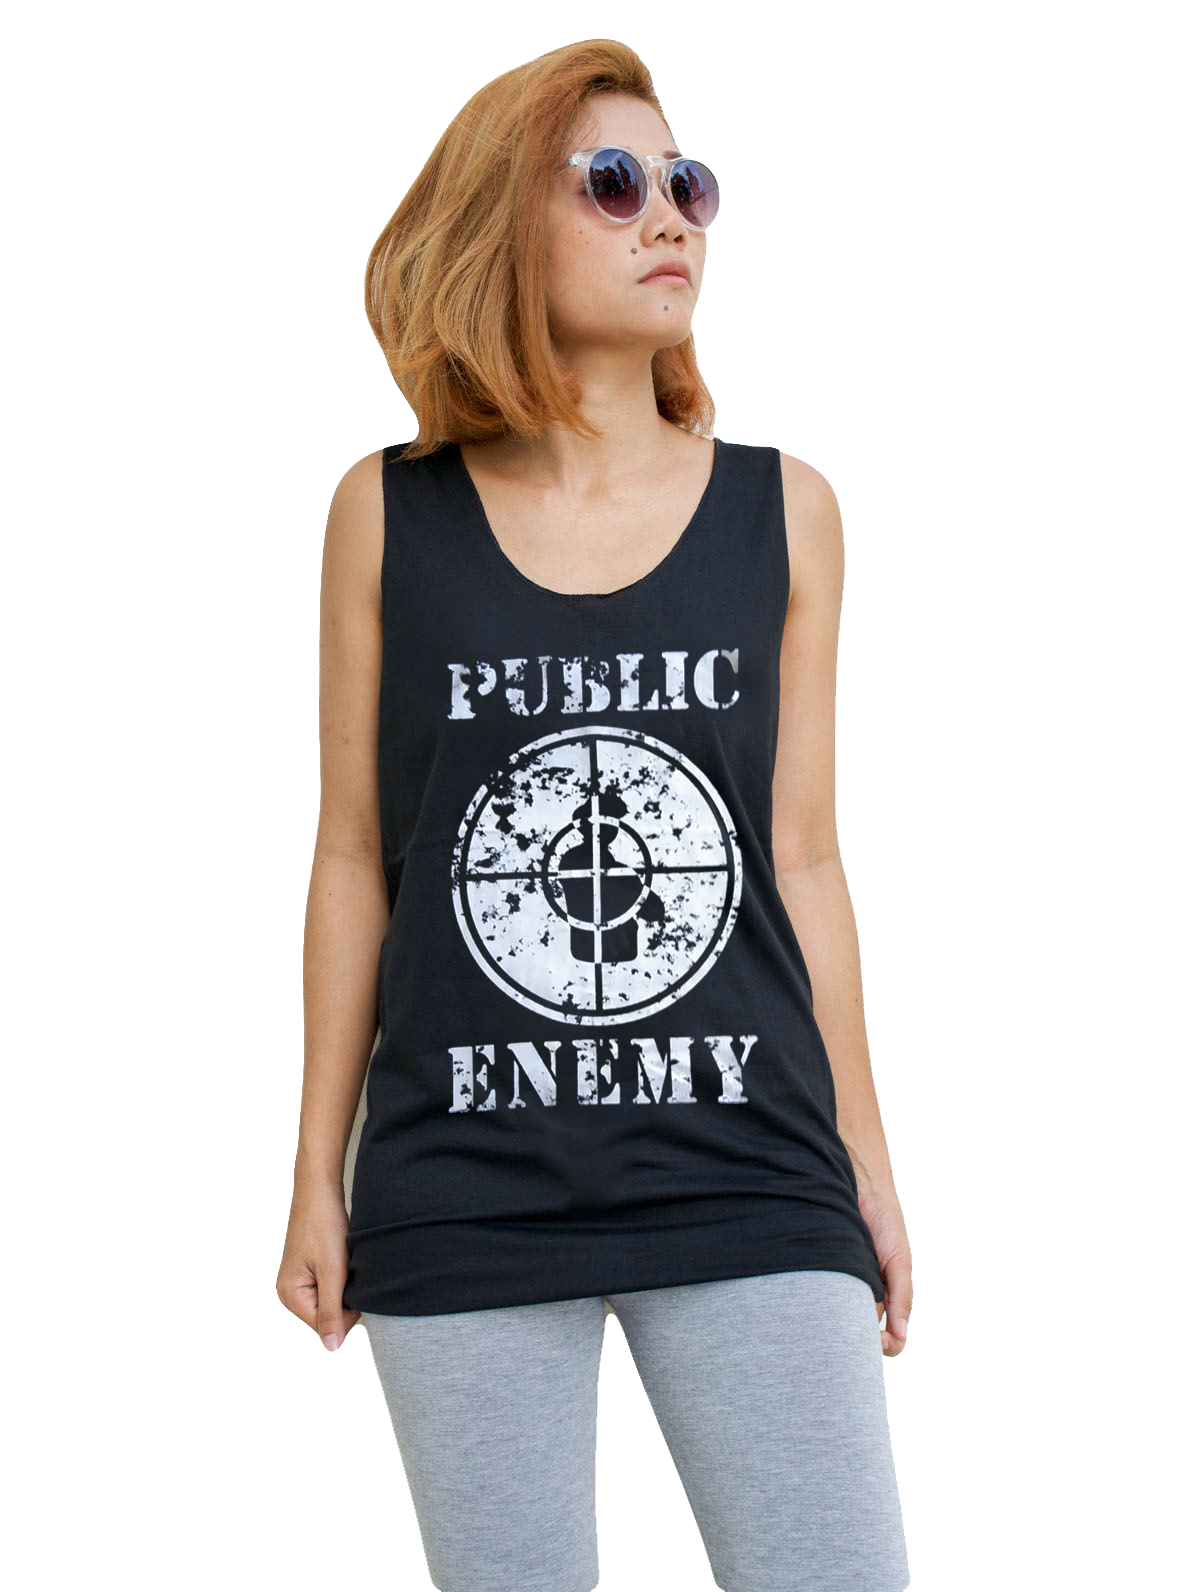 Unisex Public Enemy Tank-Top Singlet vest Sleeveless T-shirt